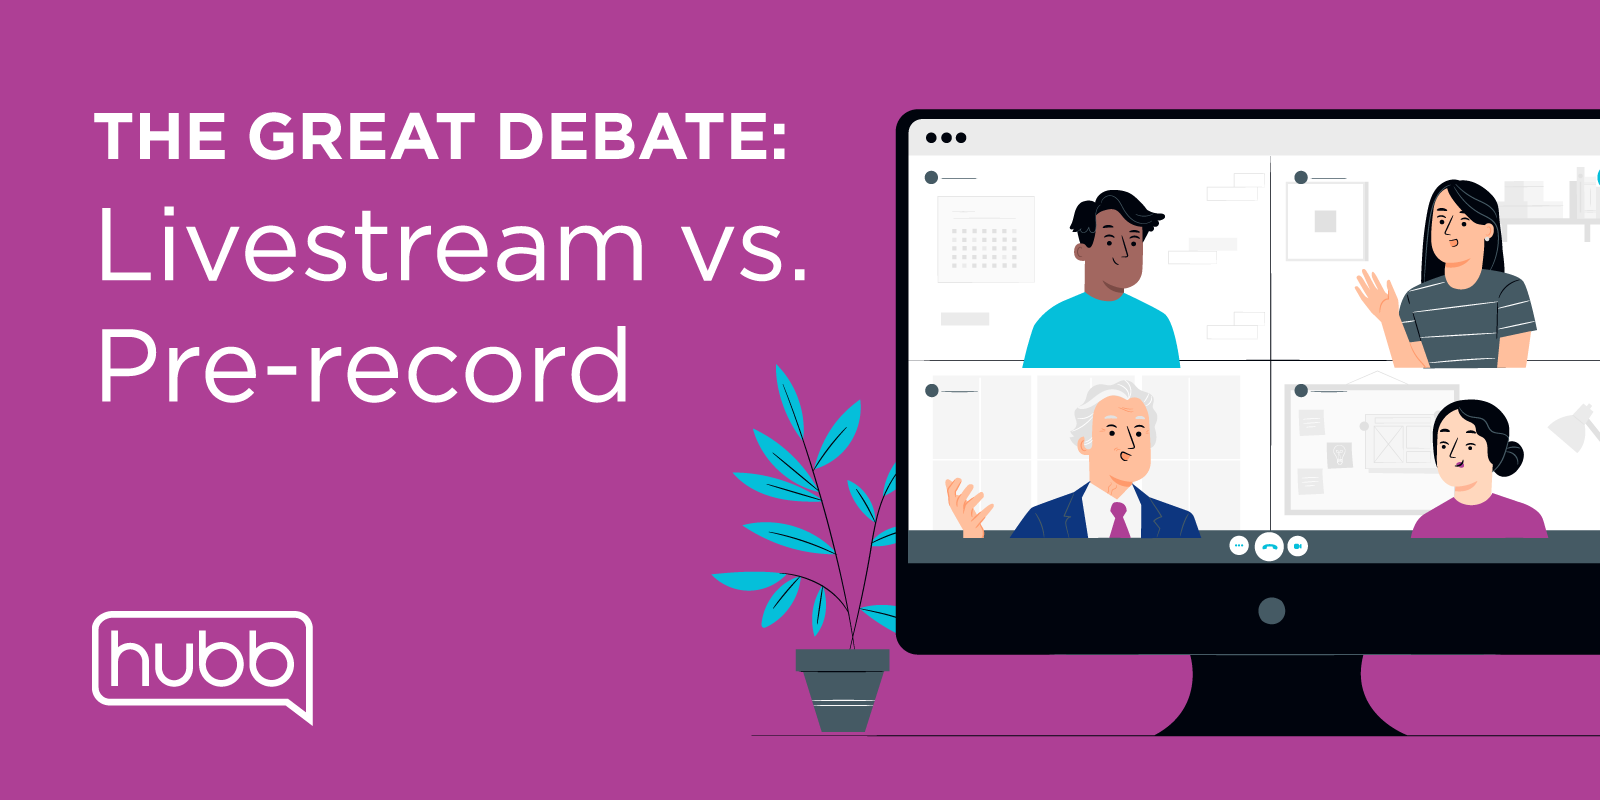 The Great Debate: Livestream vs. Pre-Recorded